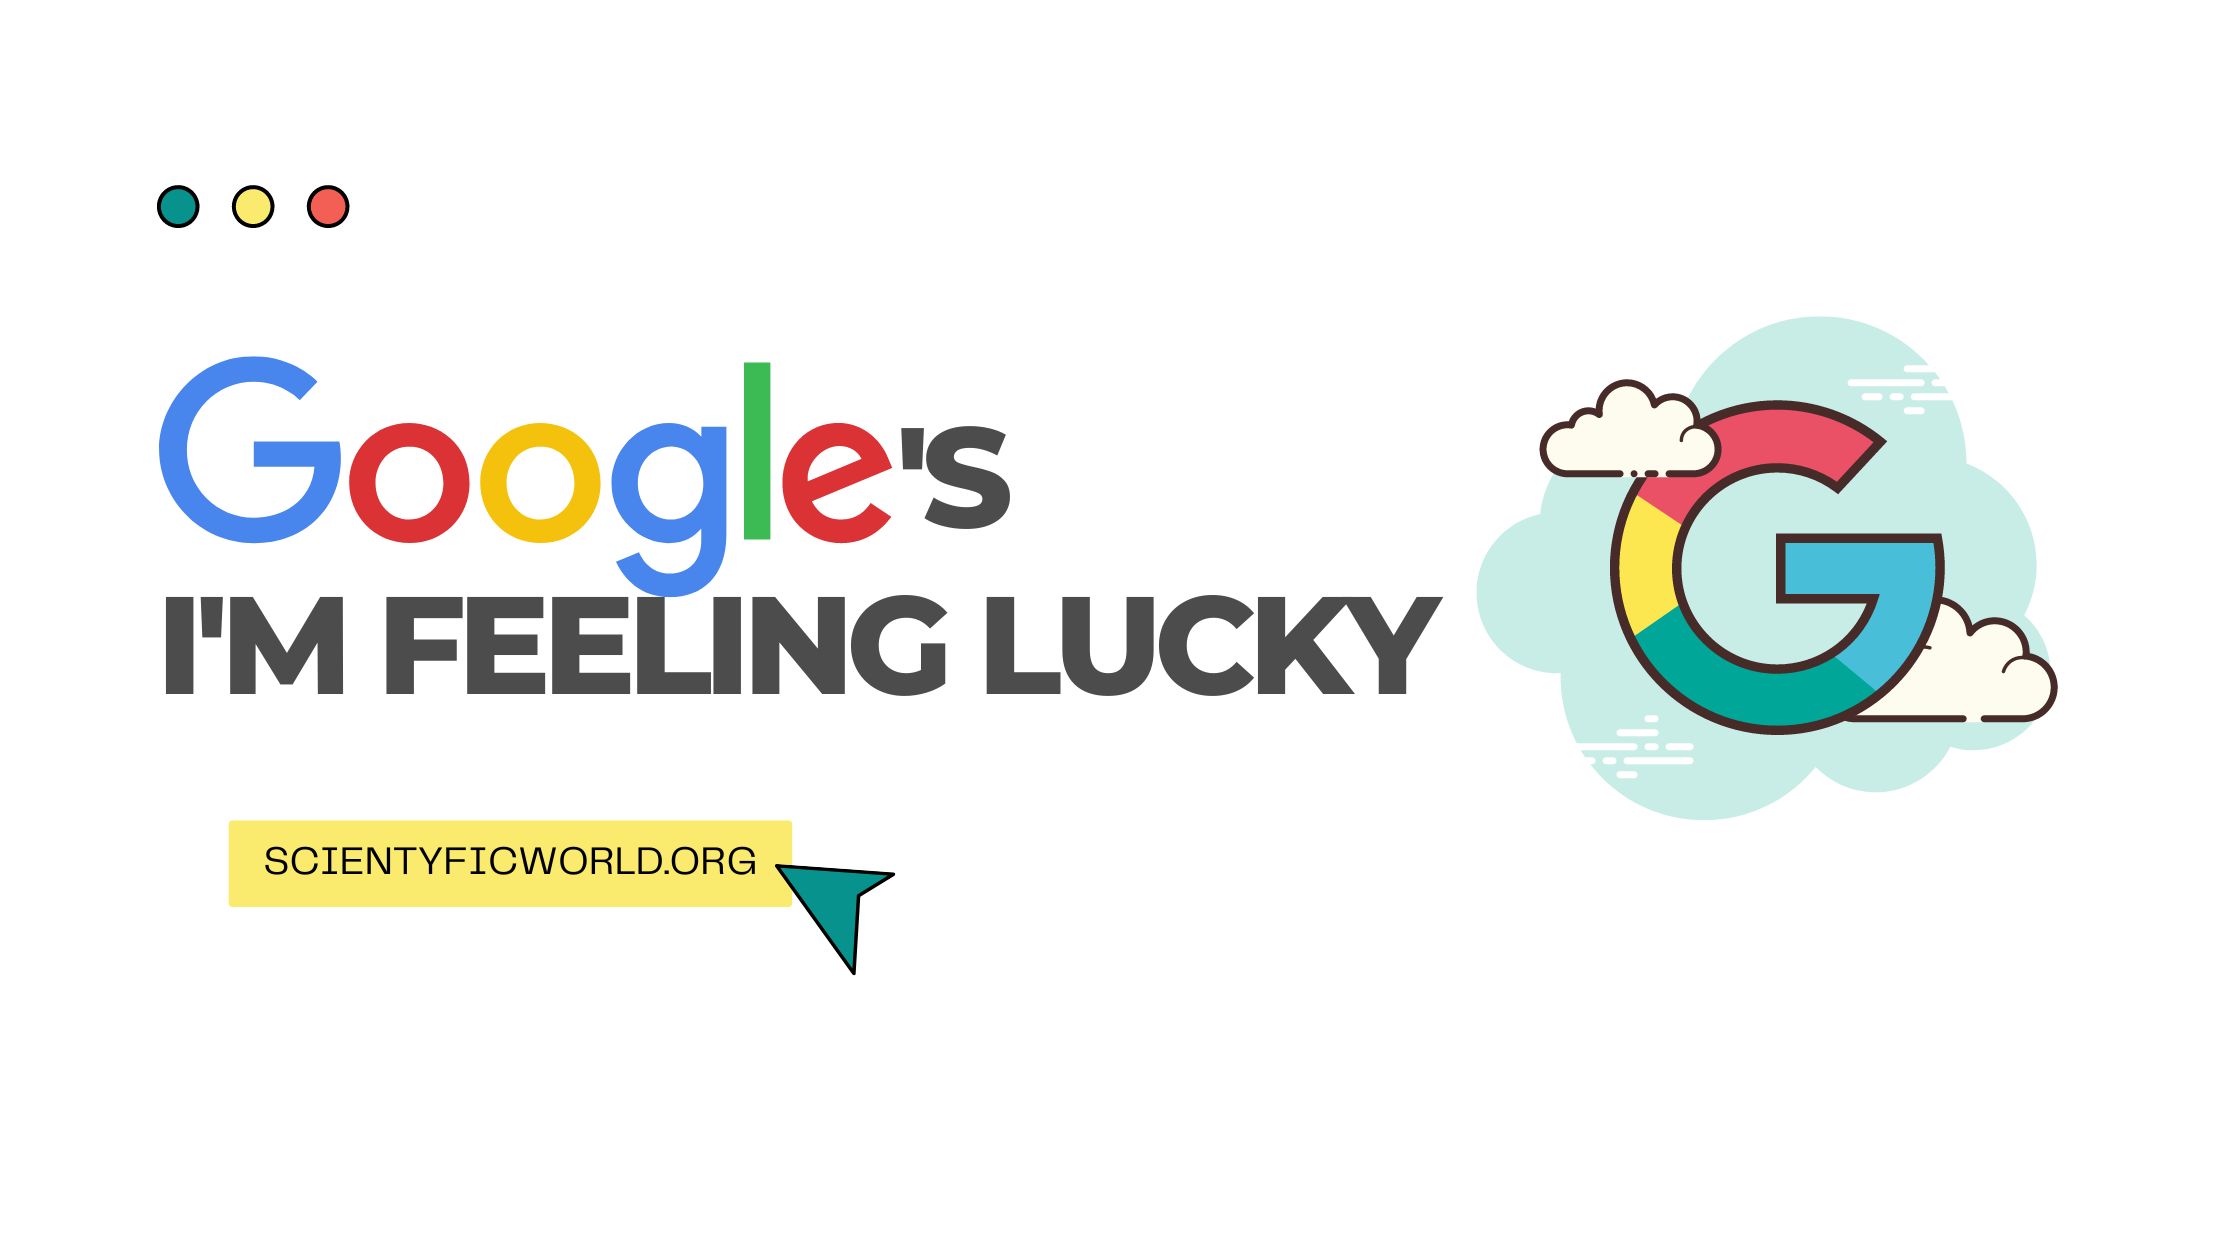 Google I'm feeling lucky post banner with Google logo